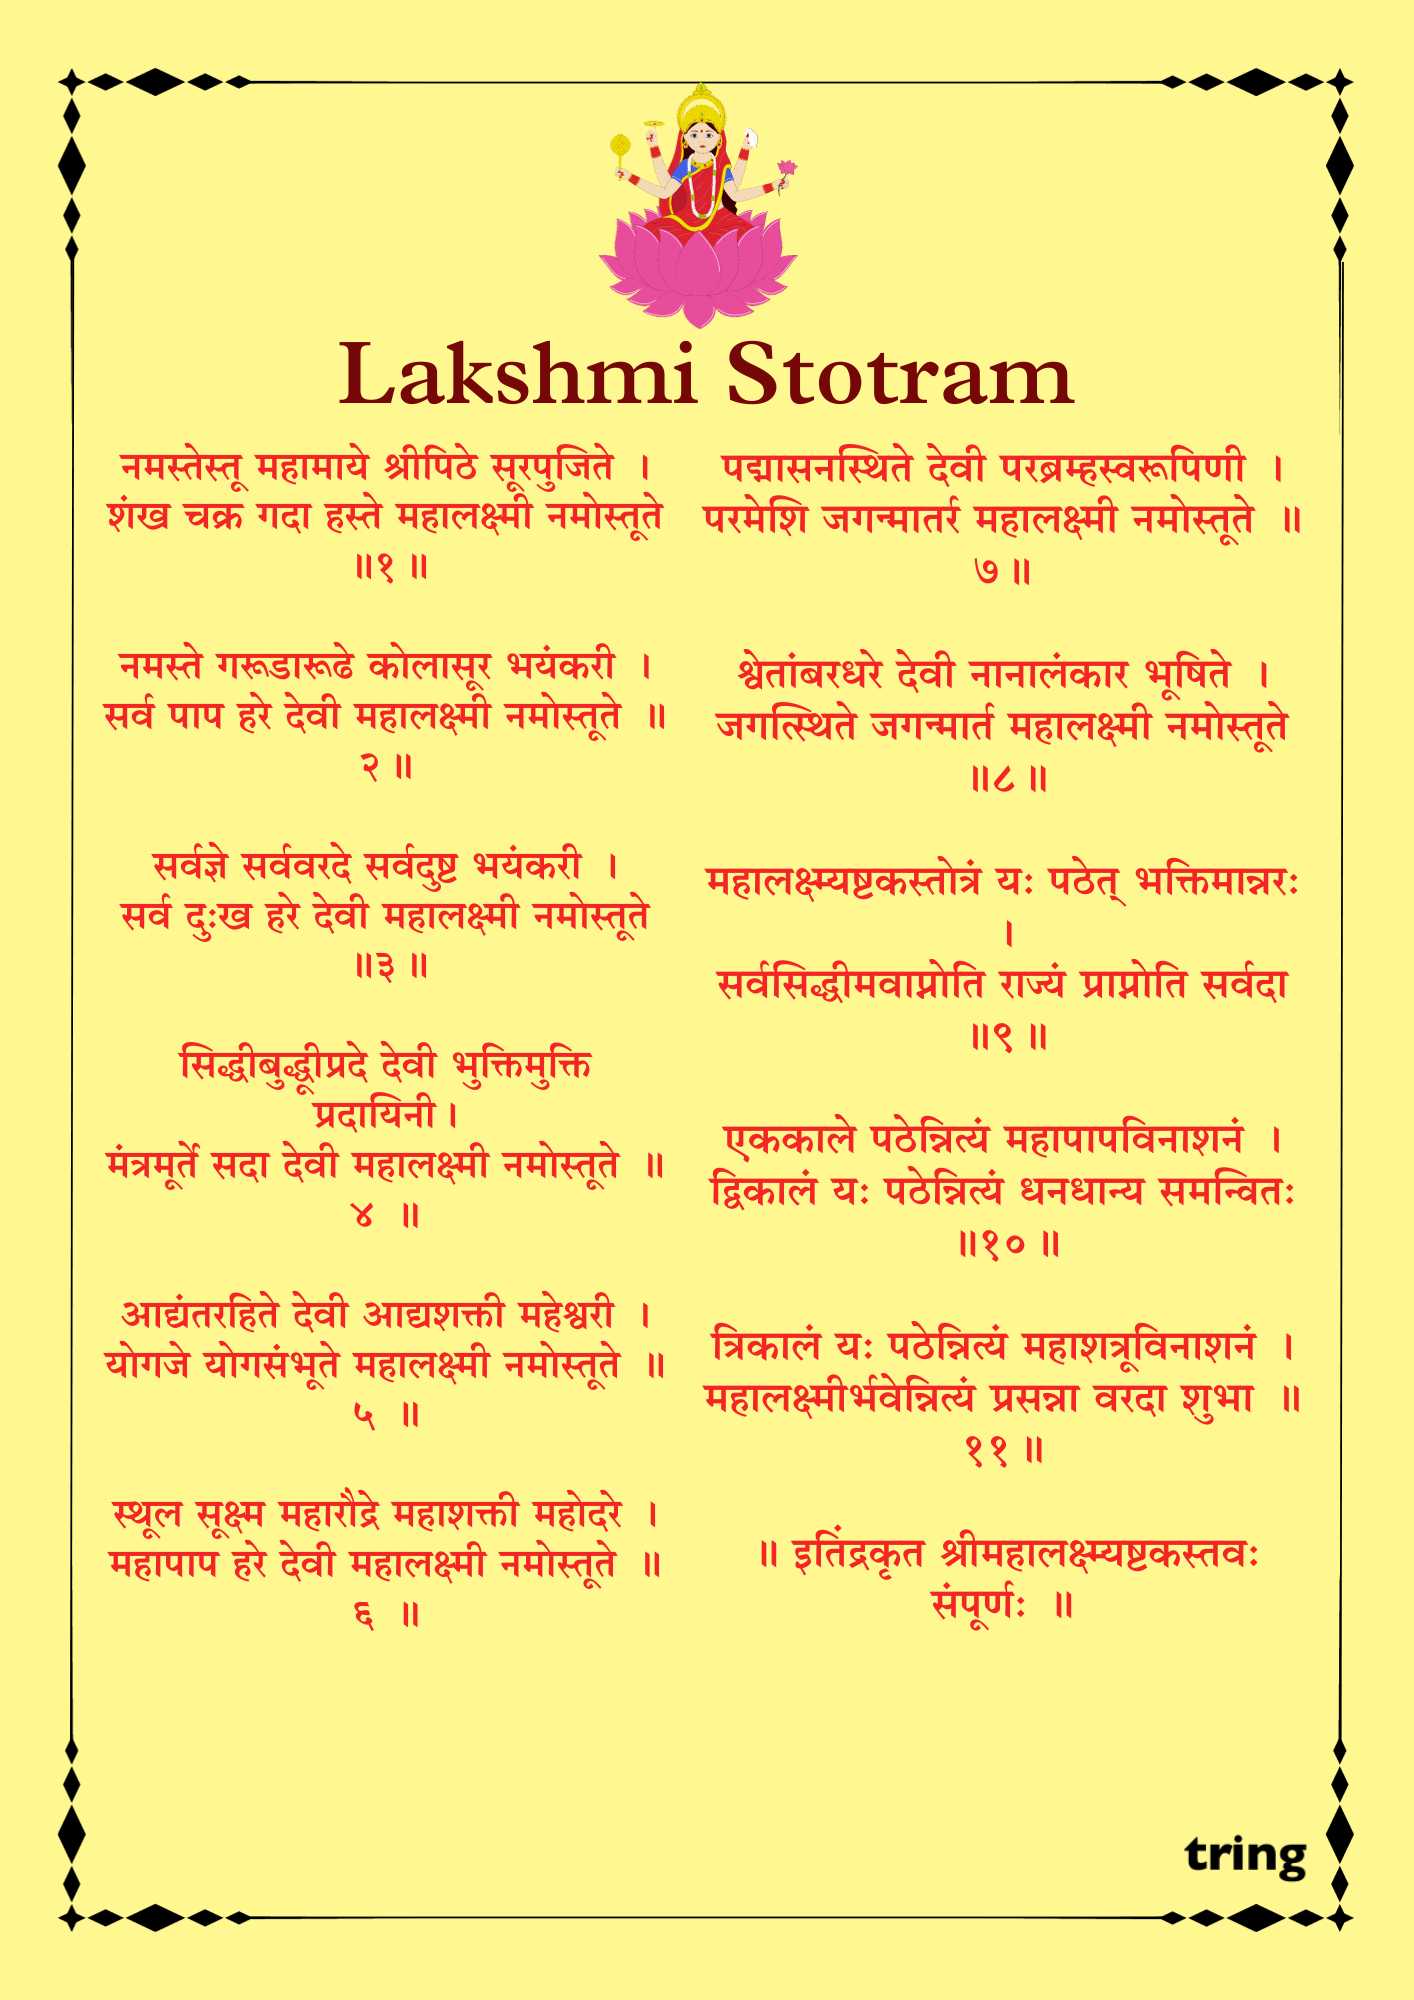 Lakshmi Stotram Images